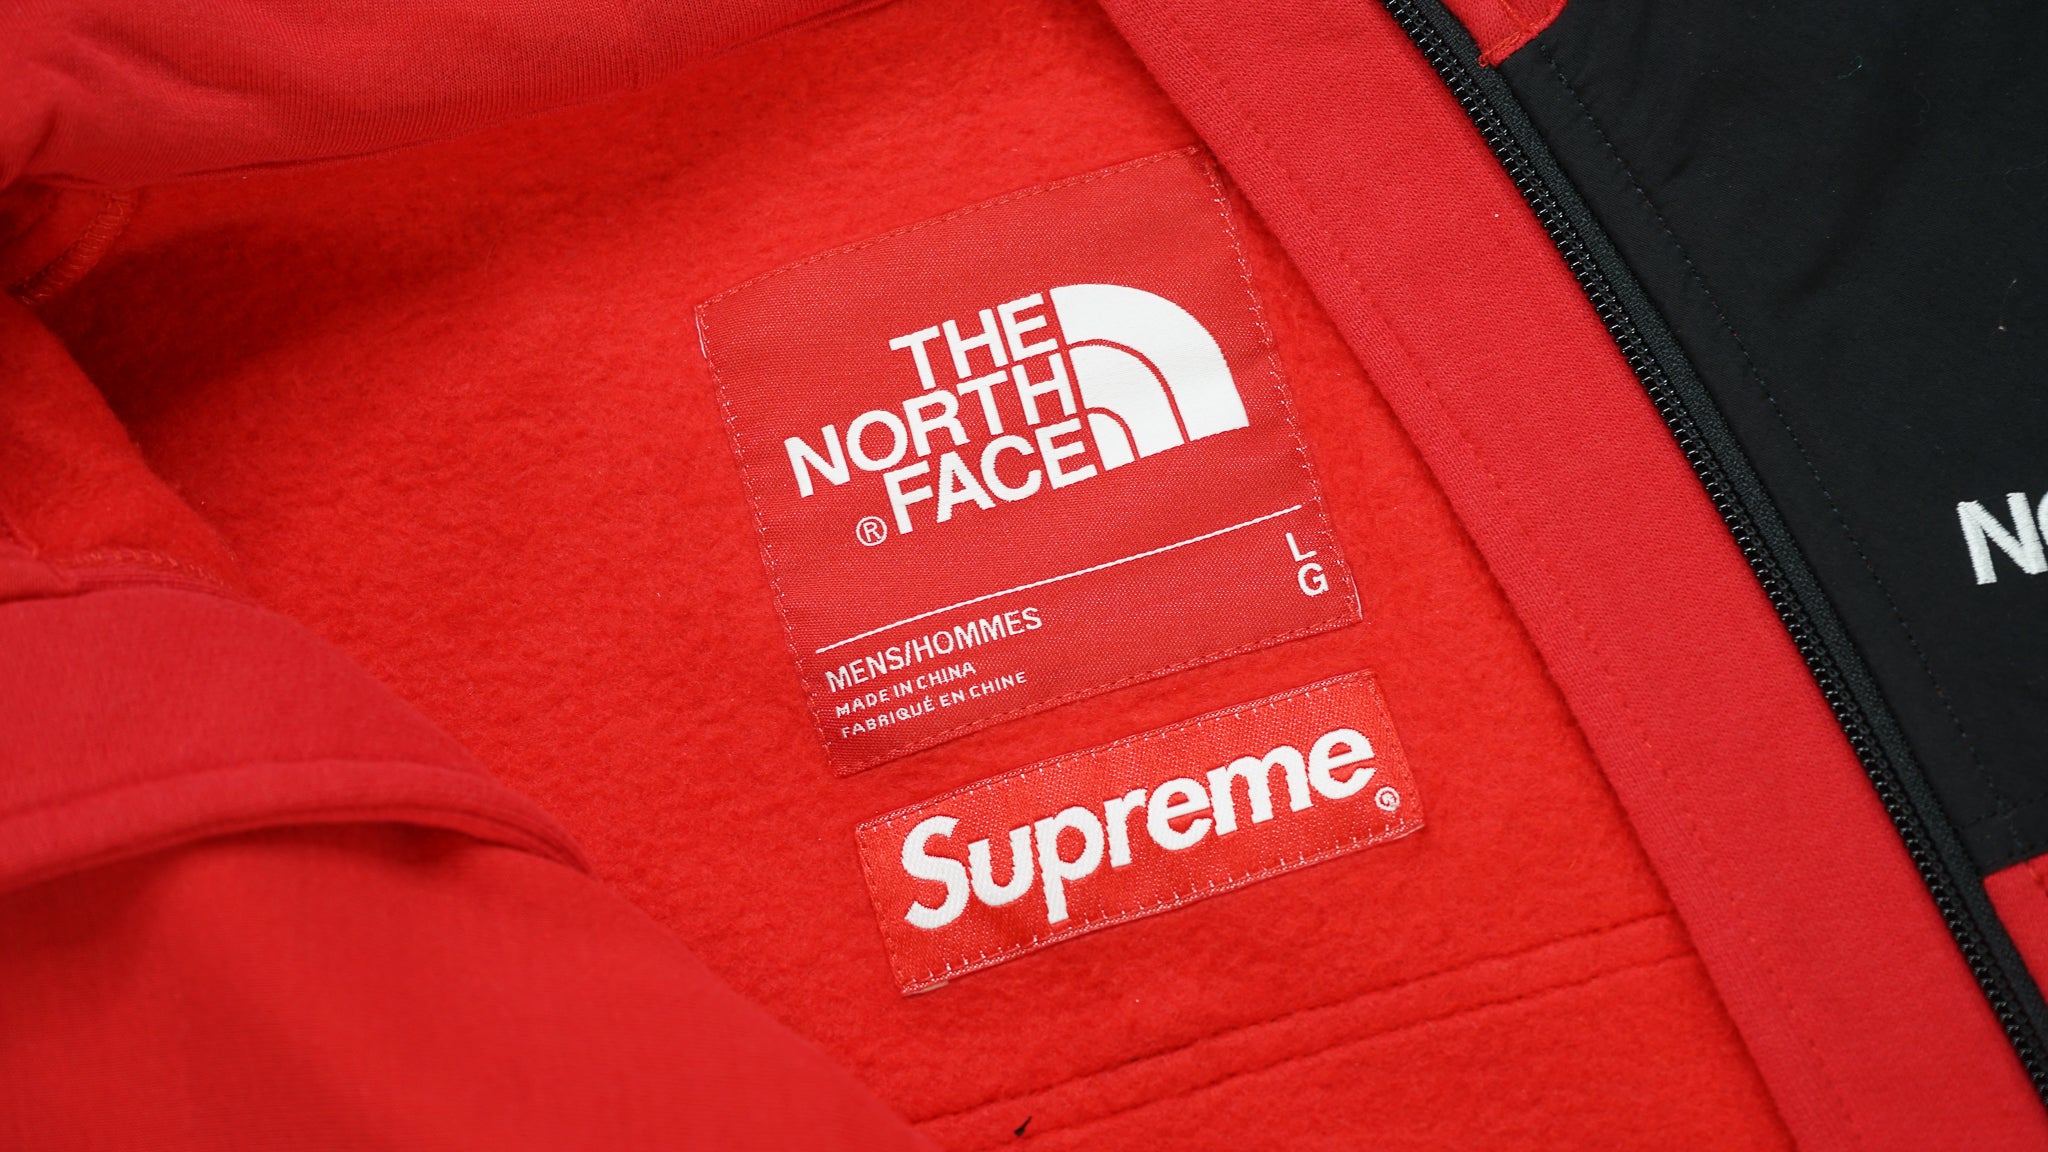 Supreme x The North Face Steep Tech Jacket Black BOGO Box Logo Sz L SS16